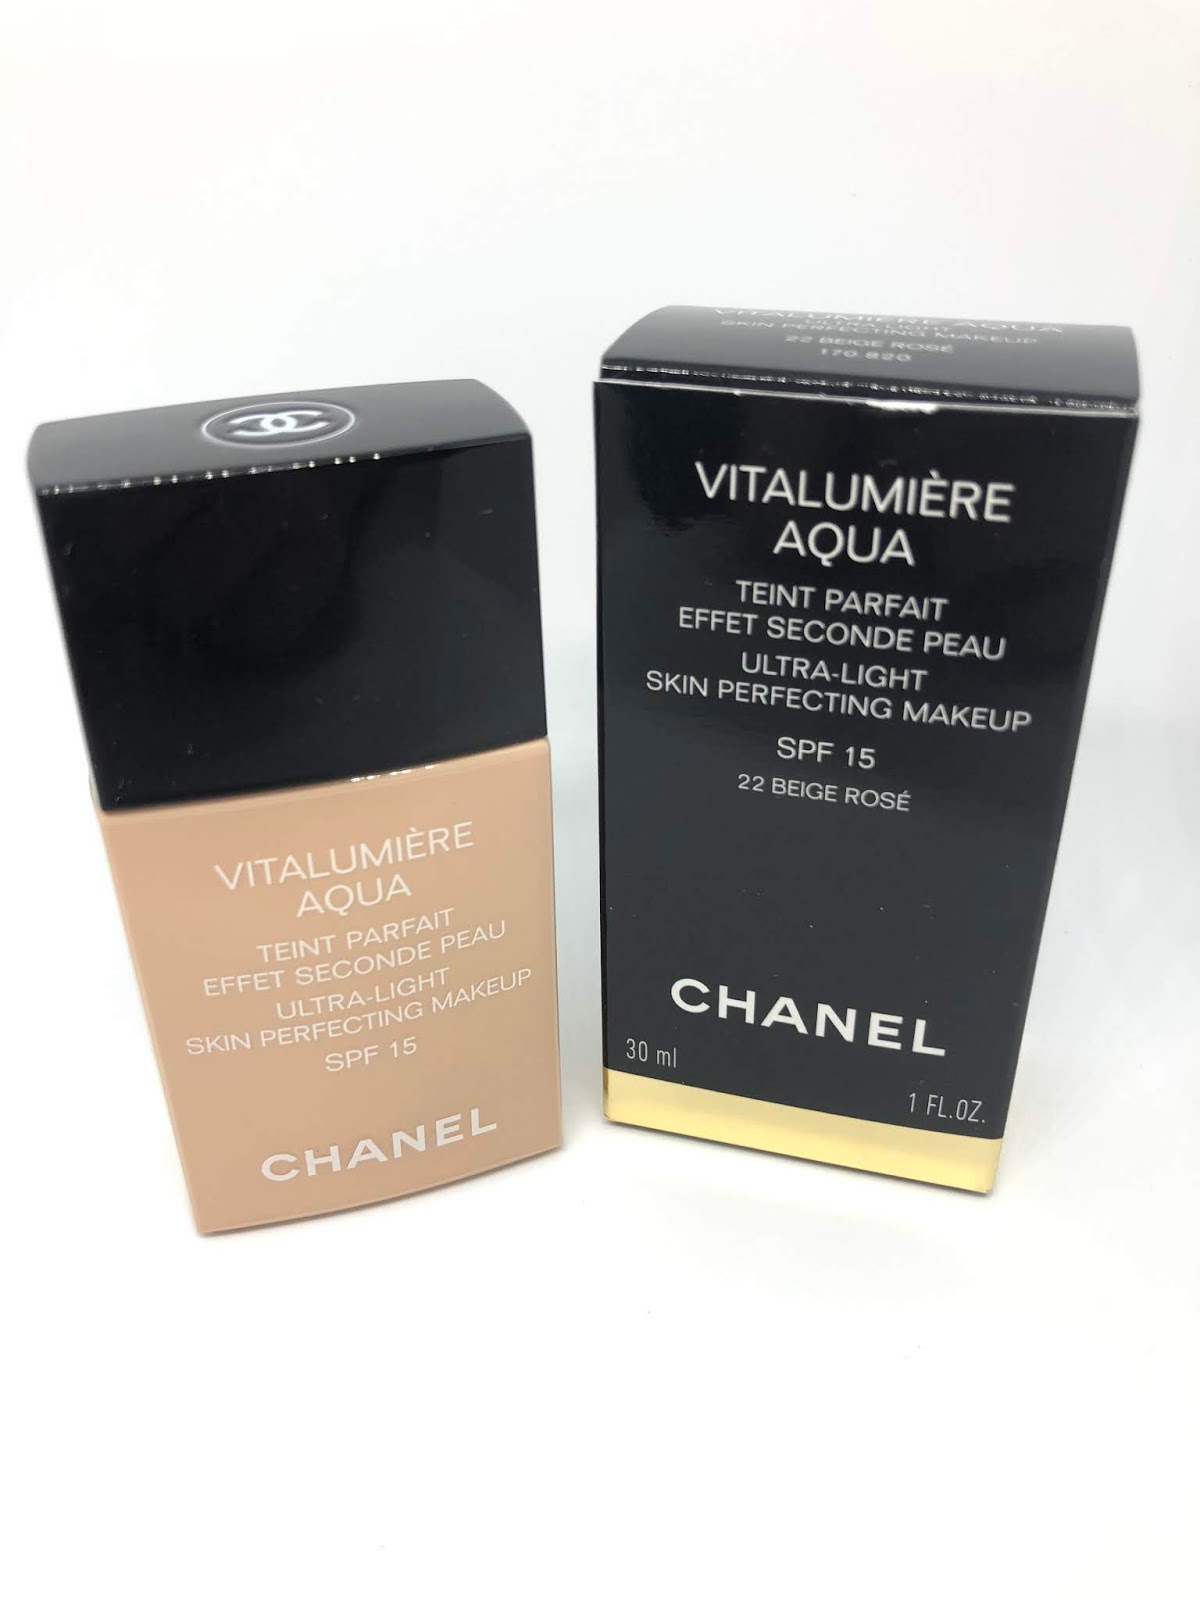 Chanel Vitalumière Aqua vs. Teint Innocence - The Beauty Look Book